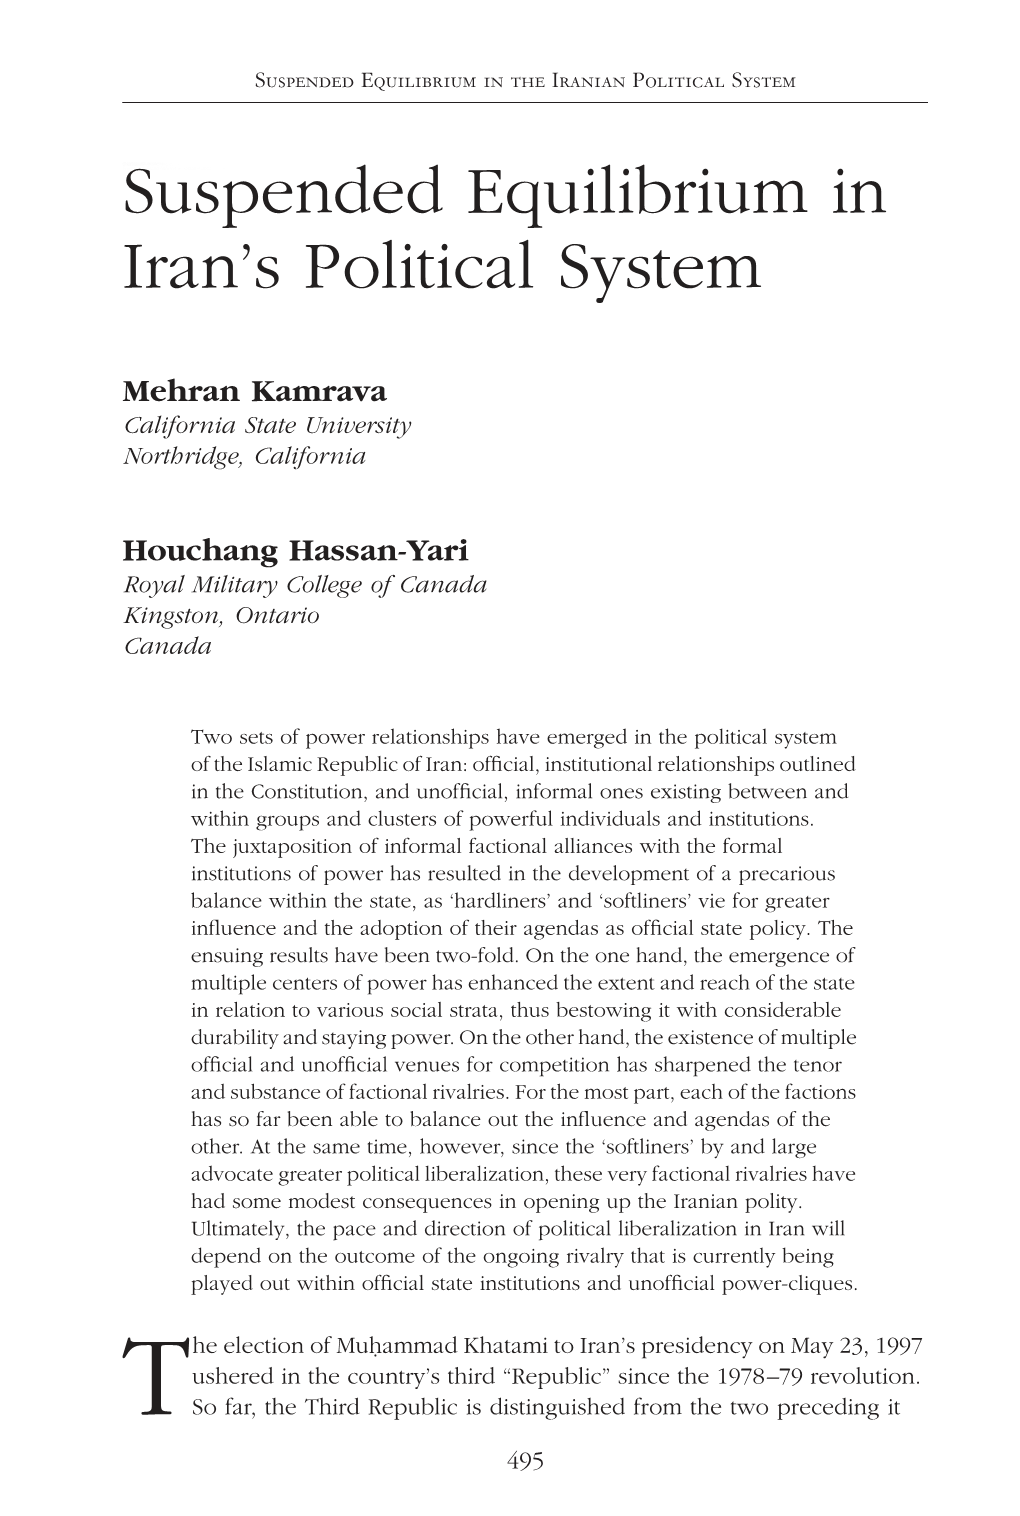 Suspended Equilibrium in Iran's Political System